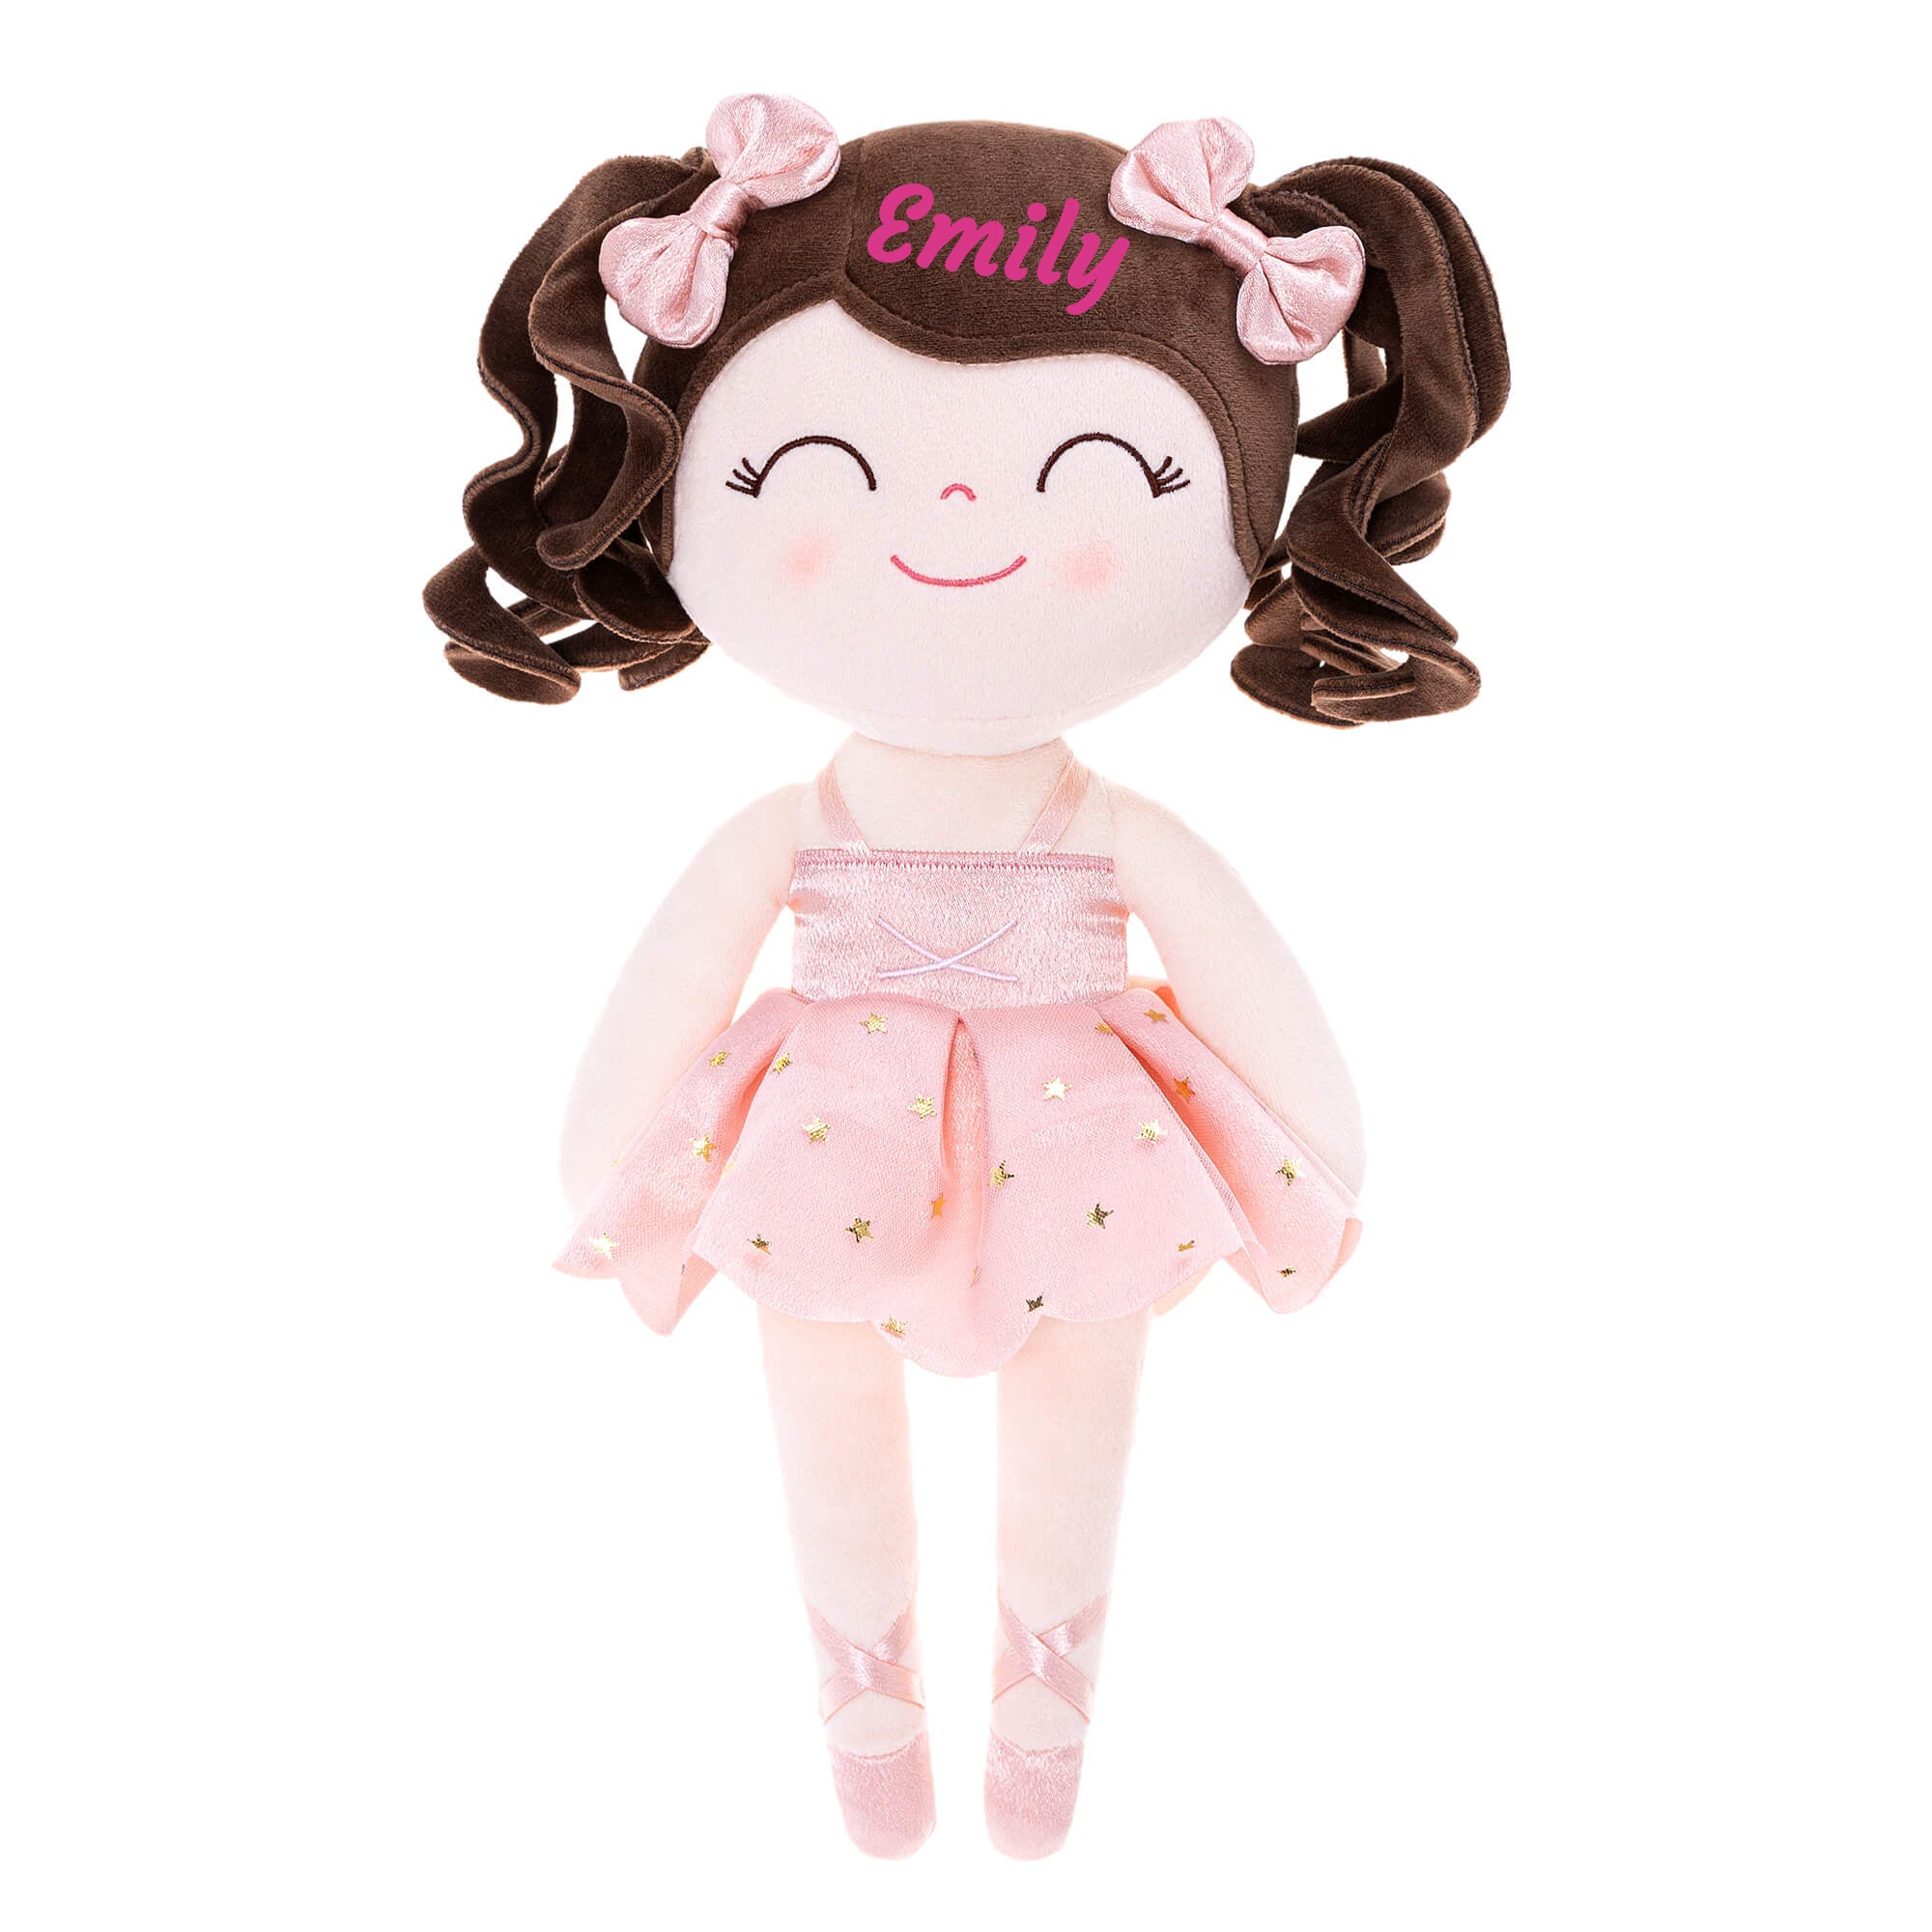 Gloveleya 14-inch Personalized Plush Dolls Curly Ballerina Series Champagne Pink Ballet Dream